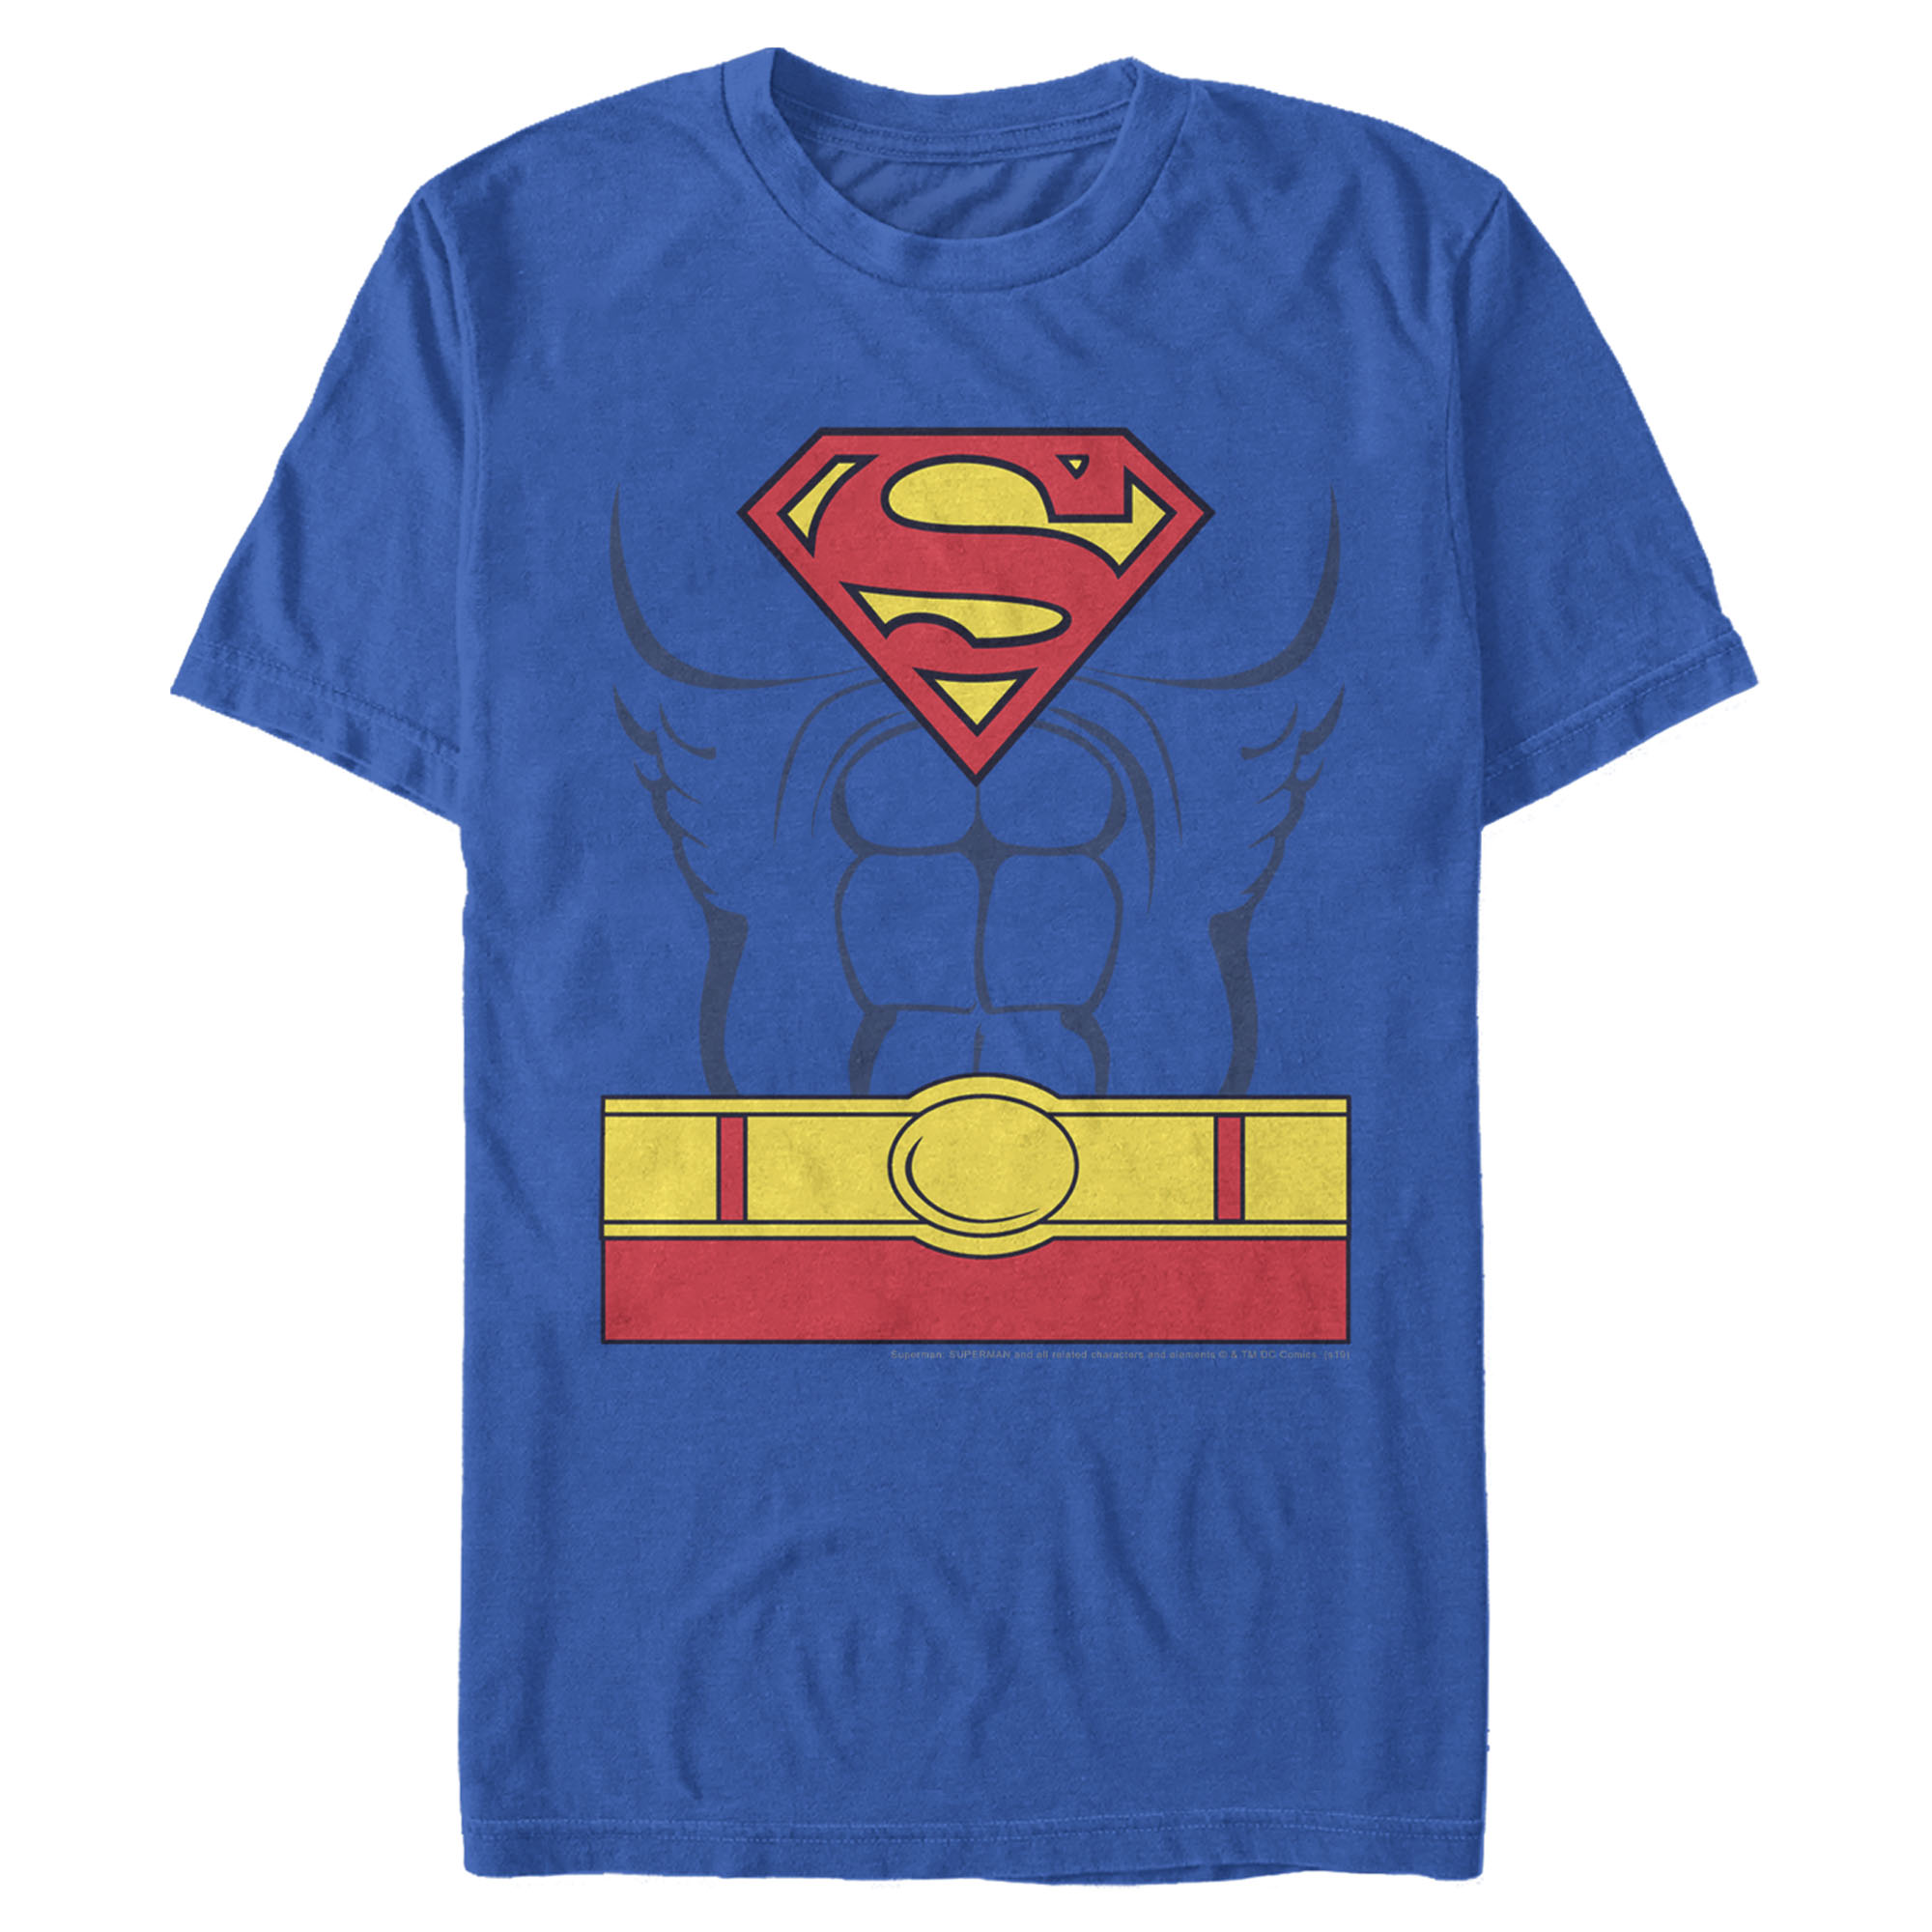 Men's Superman Hero Costume  Graphic Tee Royal Blue X Large - image 1 of 4